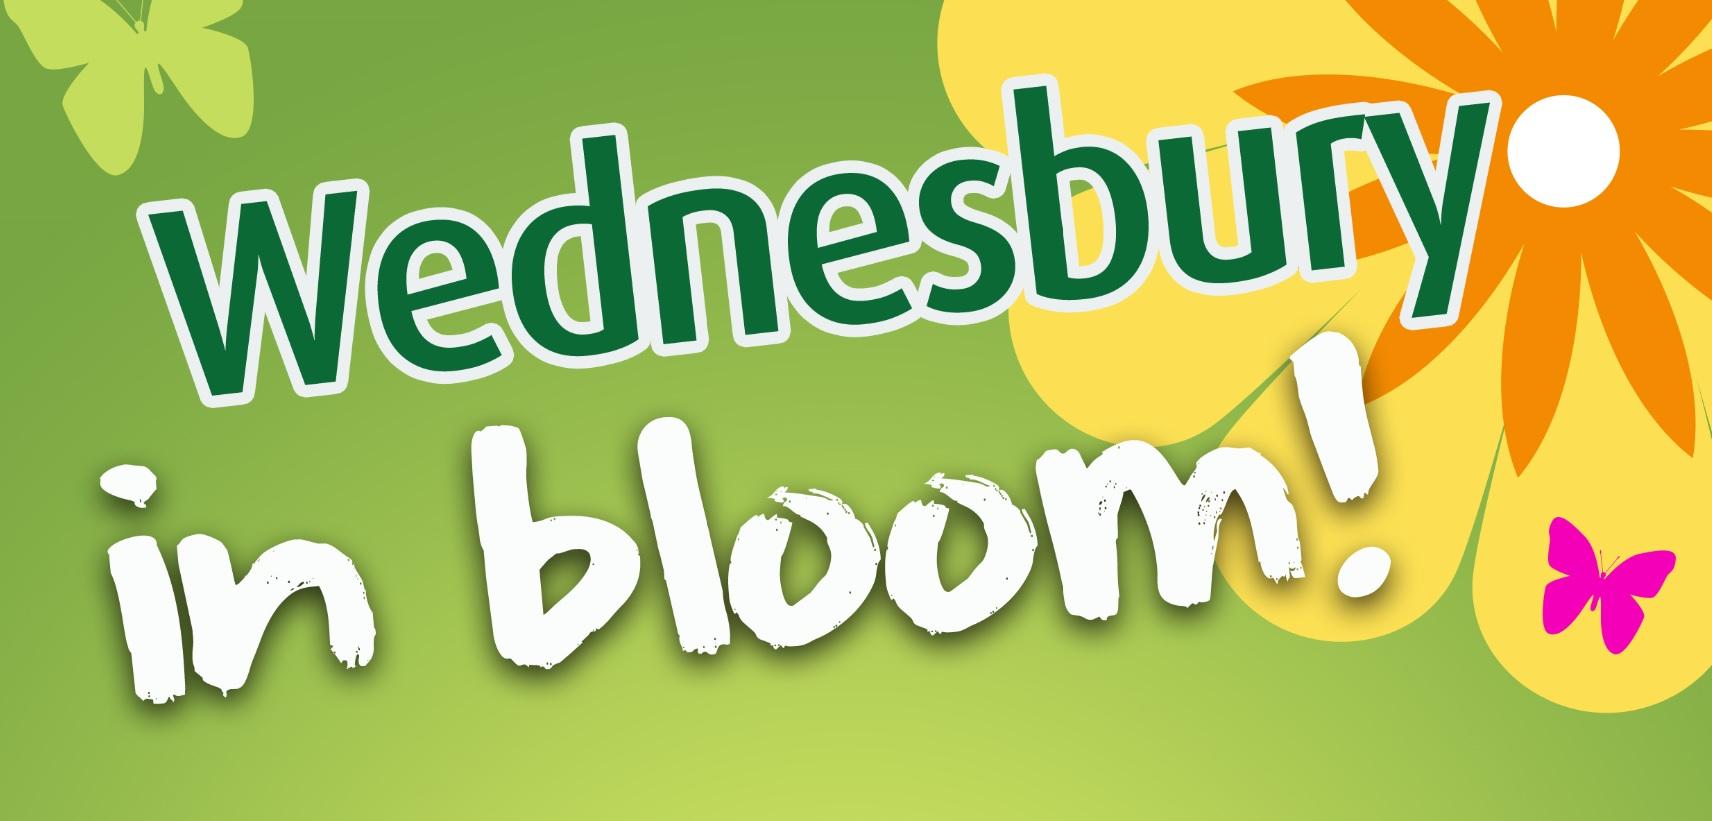 Wednesbury in Bloom graphic